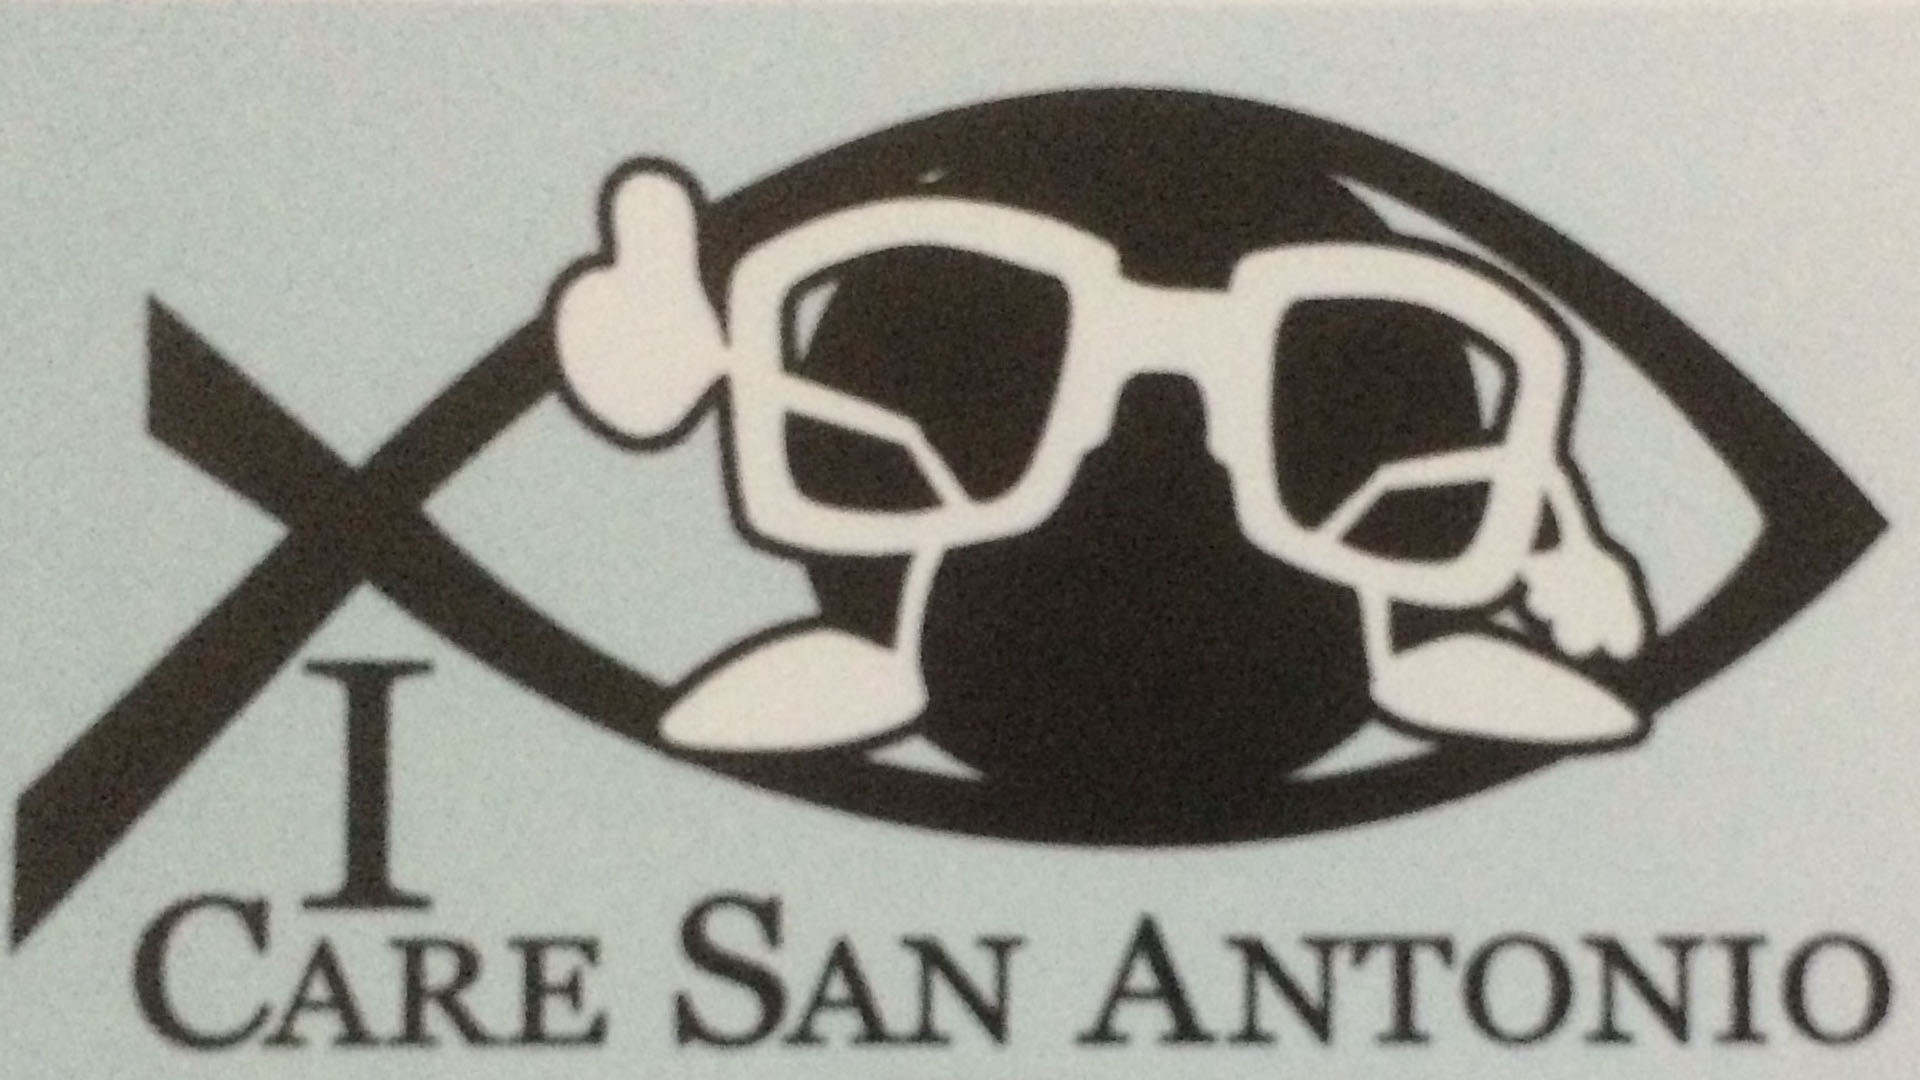 A SPARK - Advertising & Marketing, San Antonio Texas